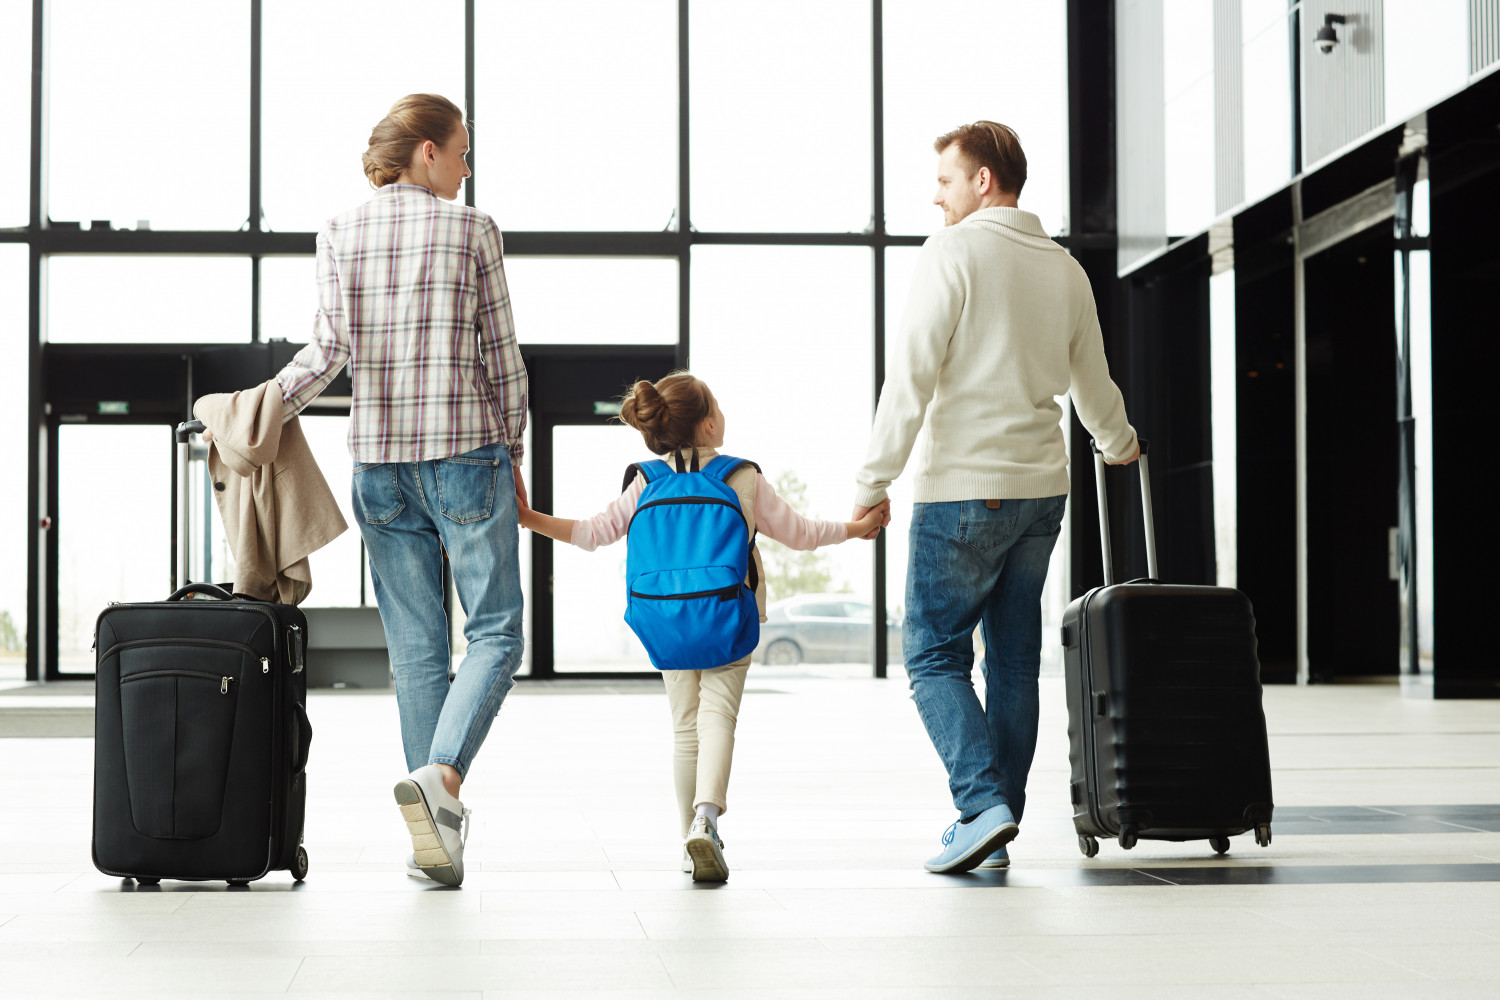 Travel Insurance Family Walking Airport